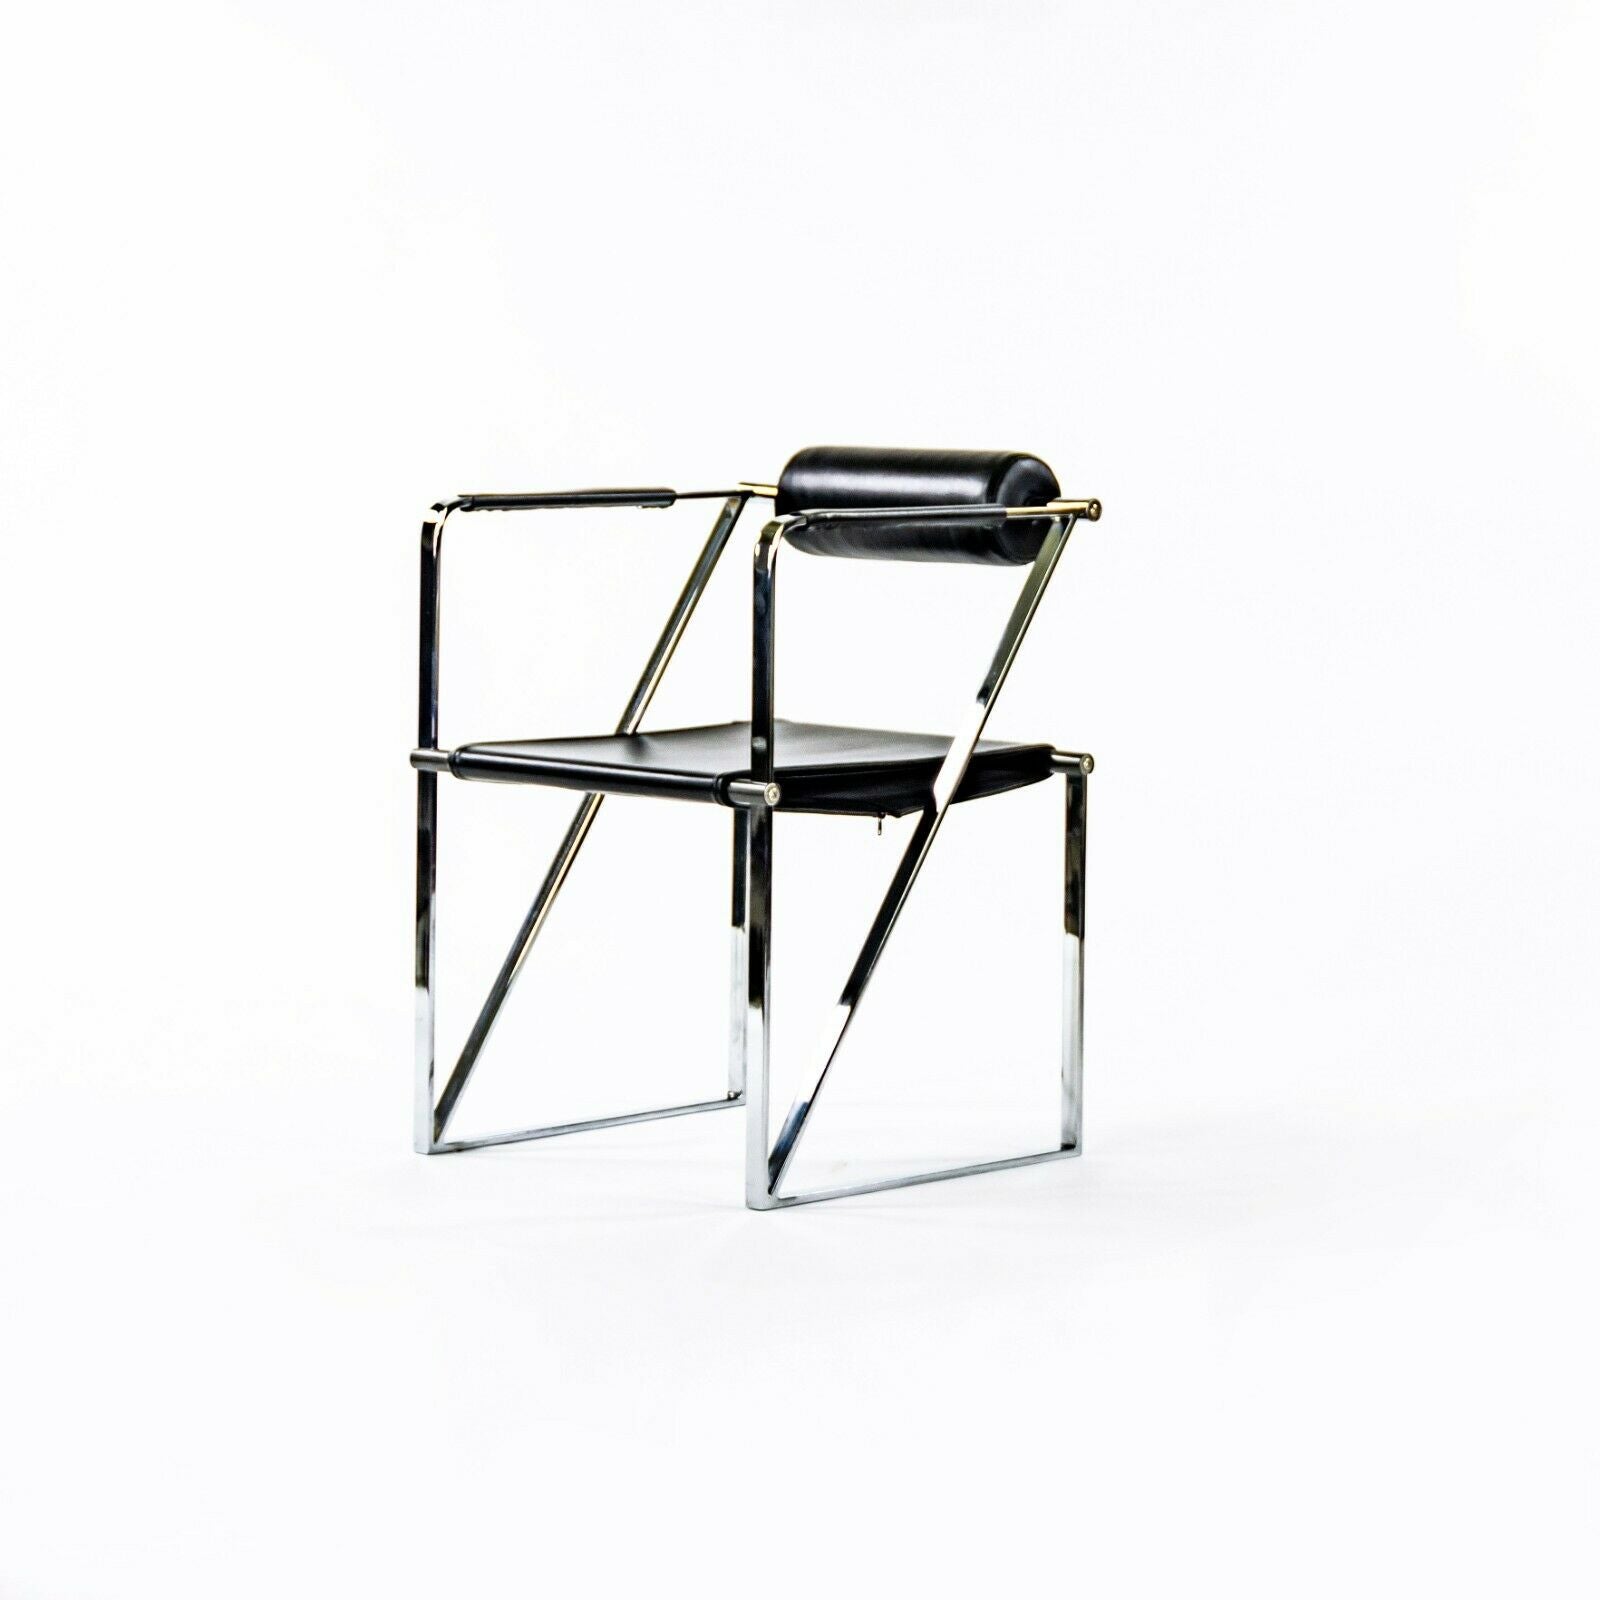 SOLD 1982 Rare Mario Botta Chrome Postmodern Seconda Chair for Alias Furniture of Italy